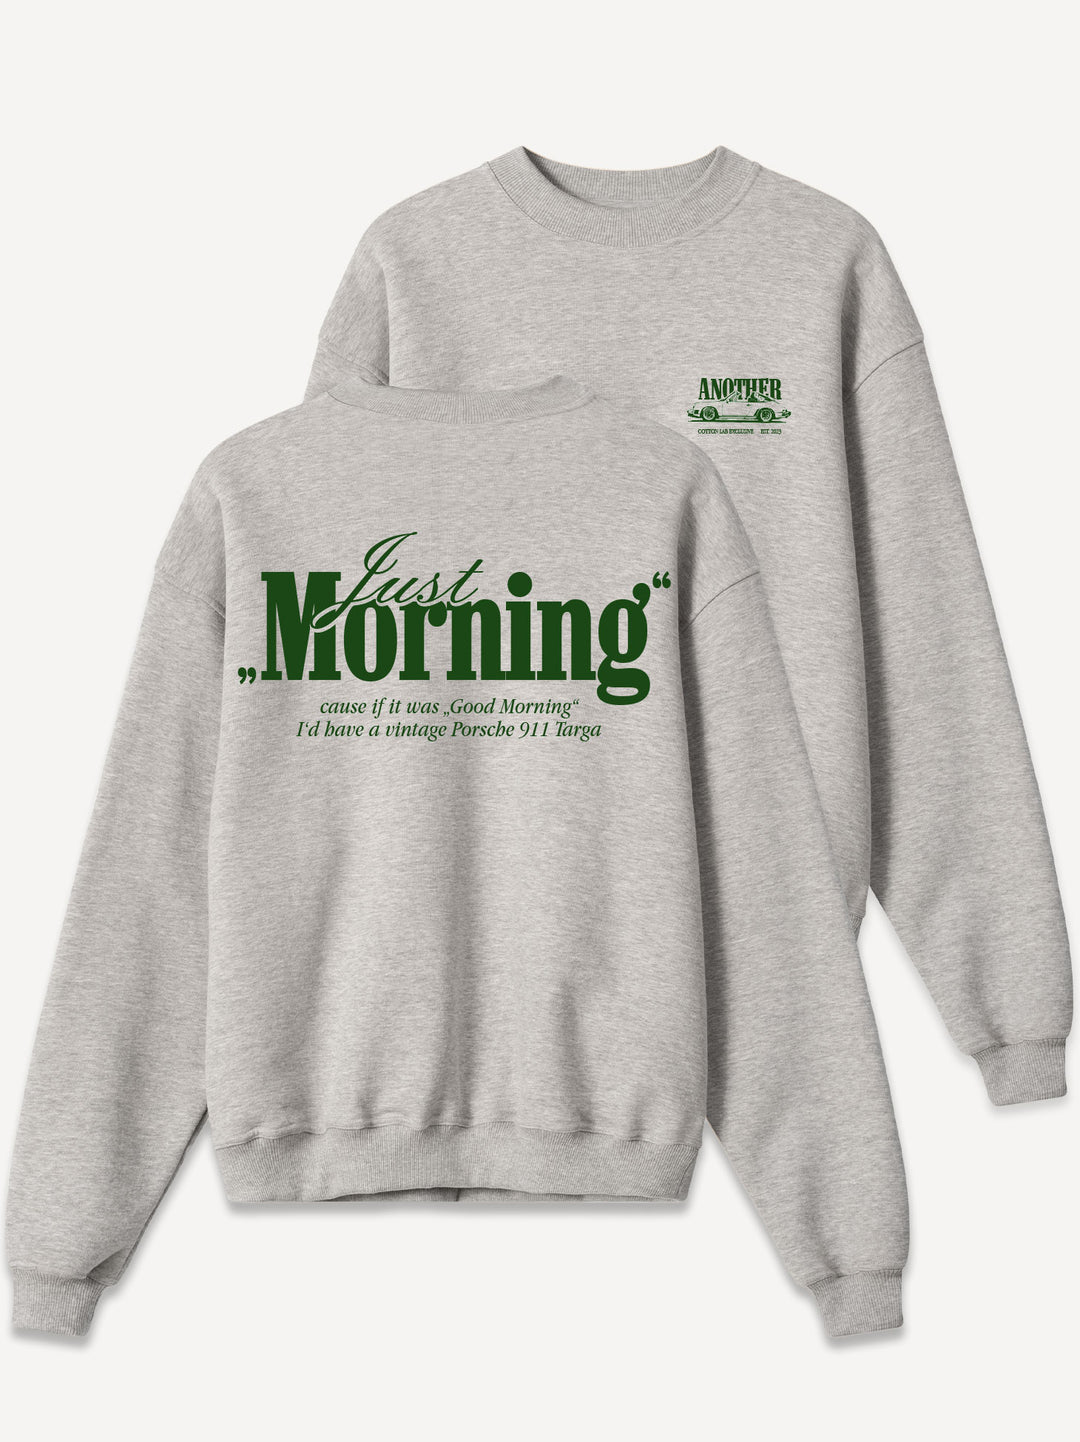 Just Morning Oversize Sweatshirt